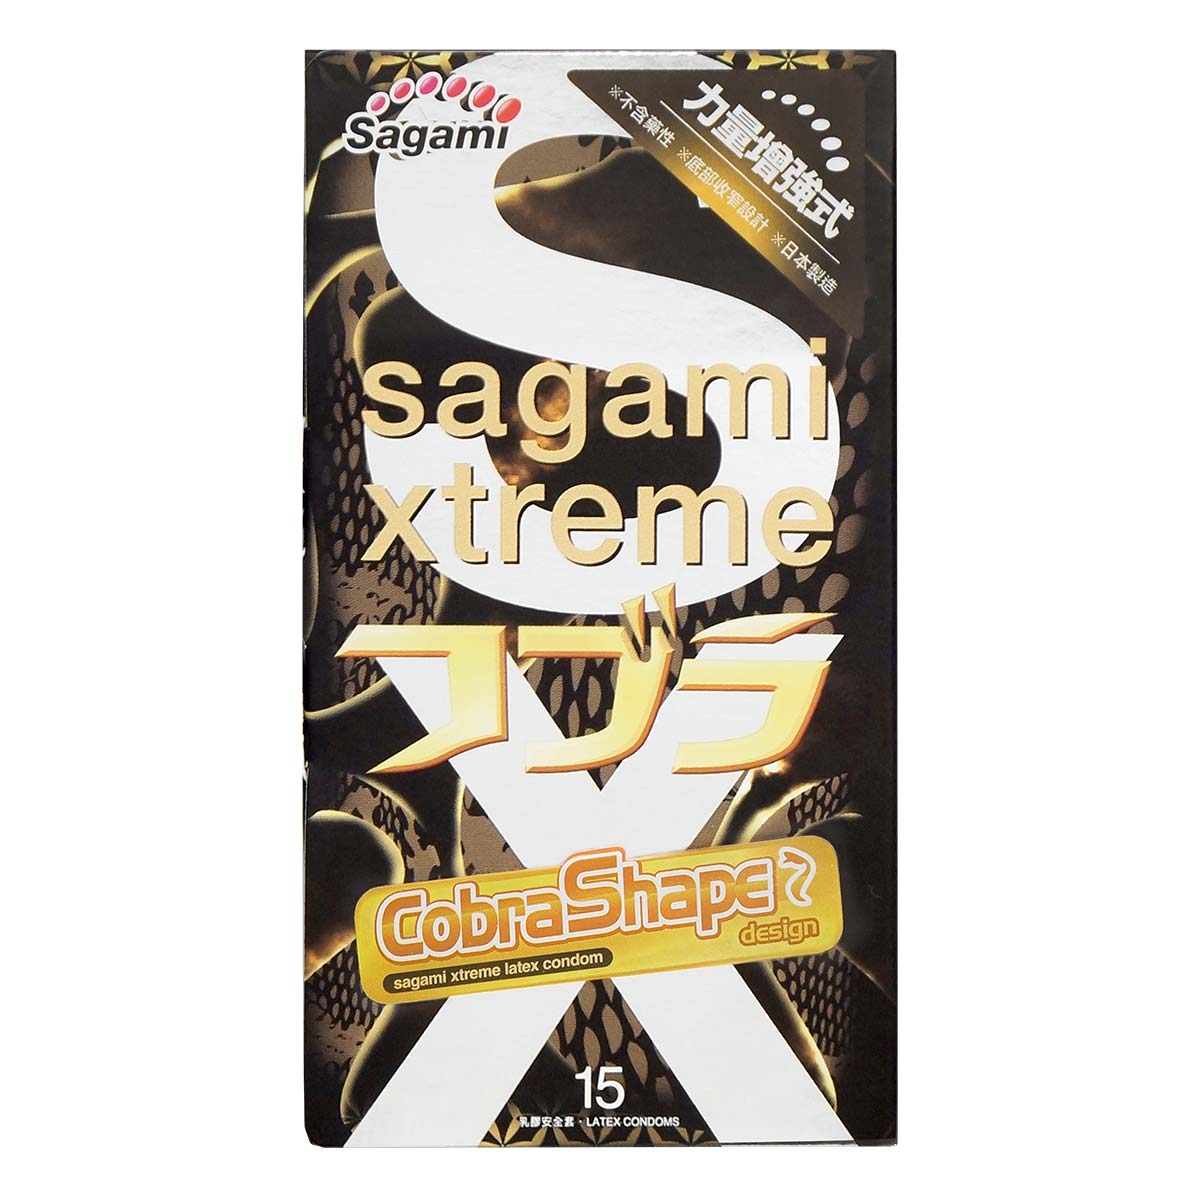 Sagami Xtreme Cobra 53/44mm 15's Pack Latex Condom ()-p_2